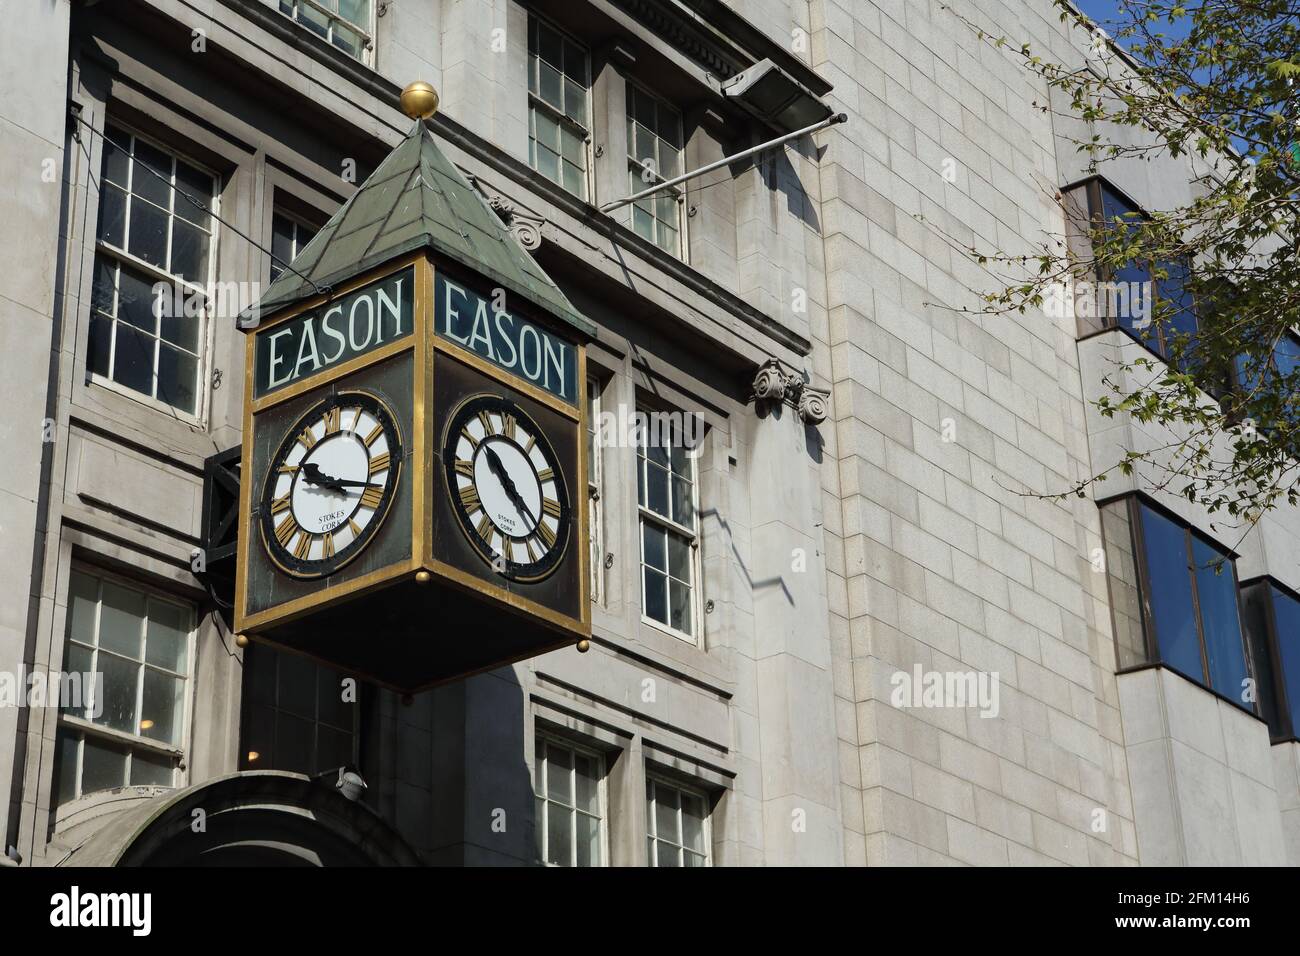 Eason clock on O'connell street in Dublin, Ireland Stock Photo